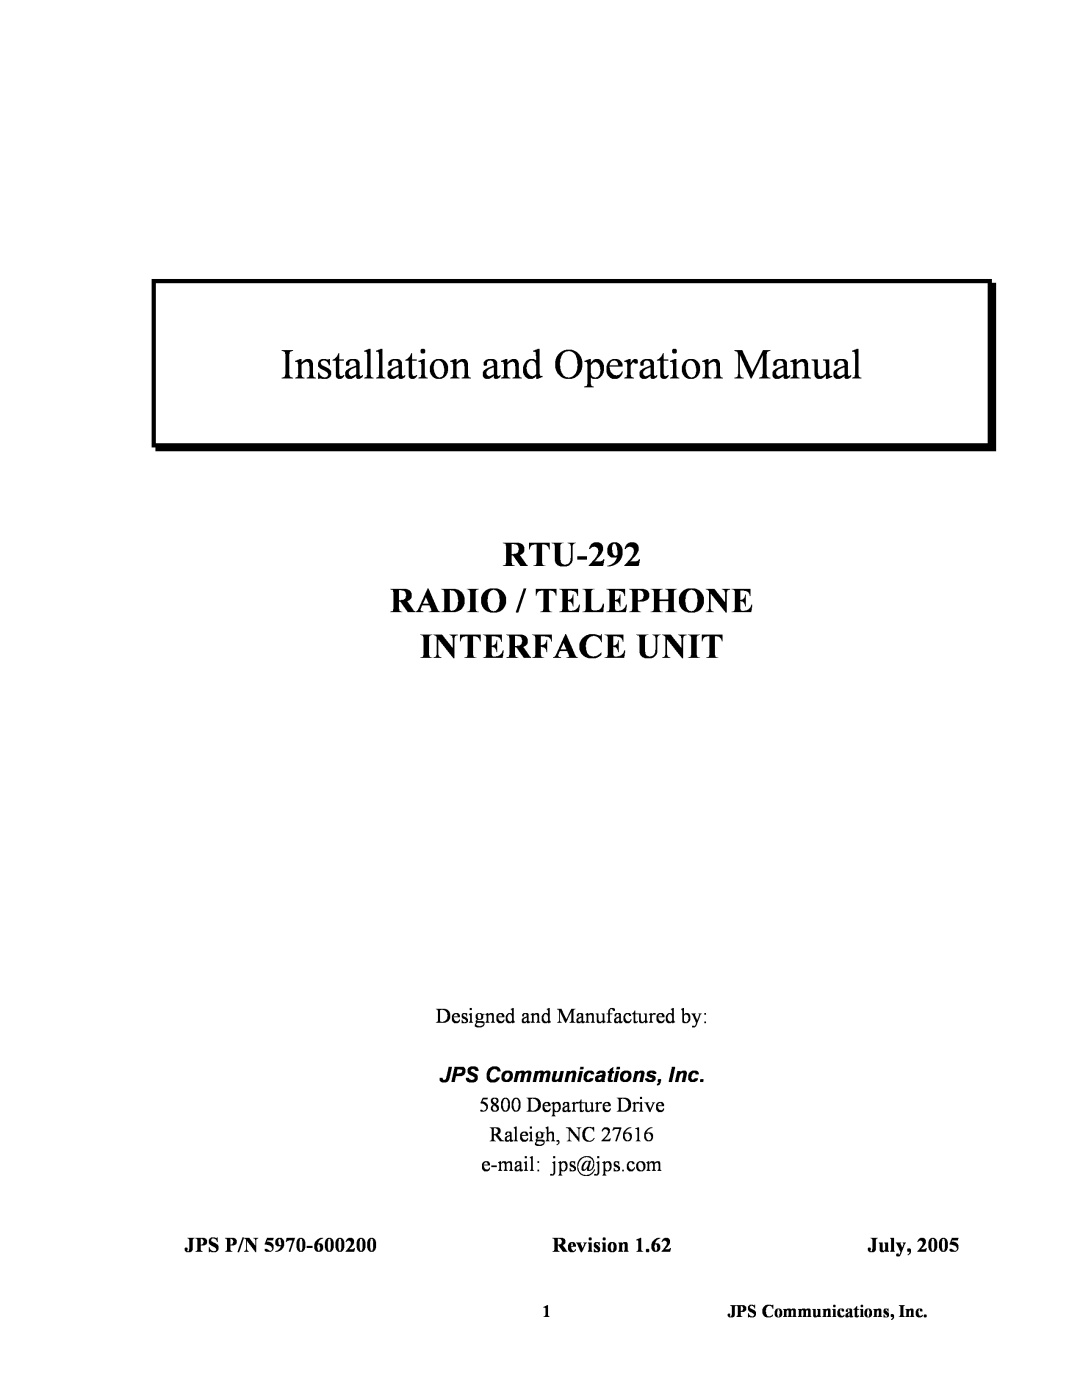 Nortel Networks operation manual Installation and Operation Manual, RTU-292 RADIO / TELEPHONE INTERFACE UNIT, Jps P/N 